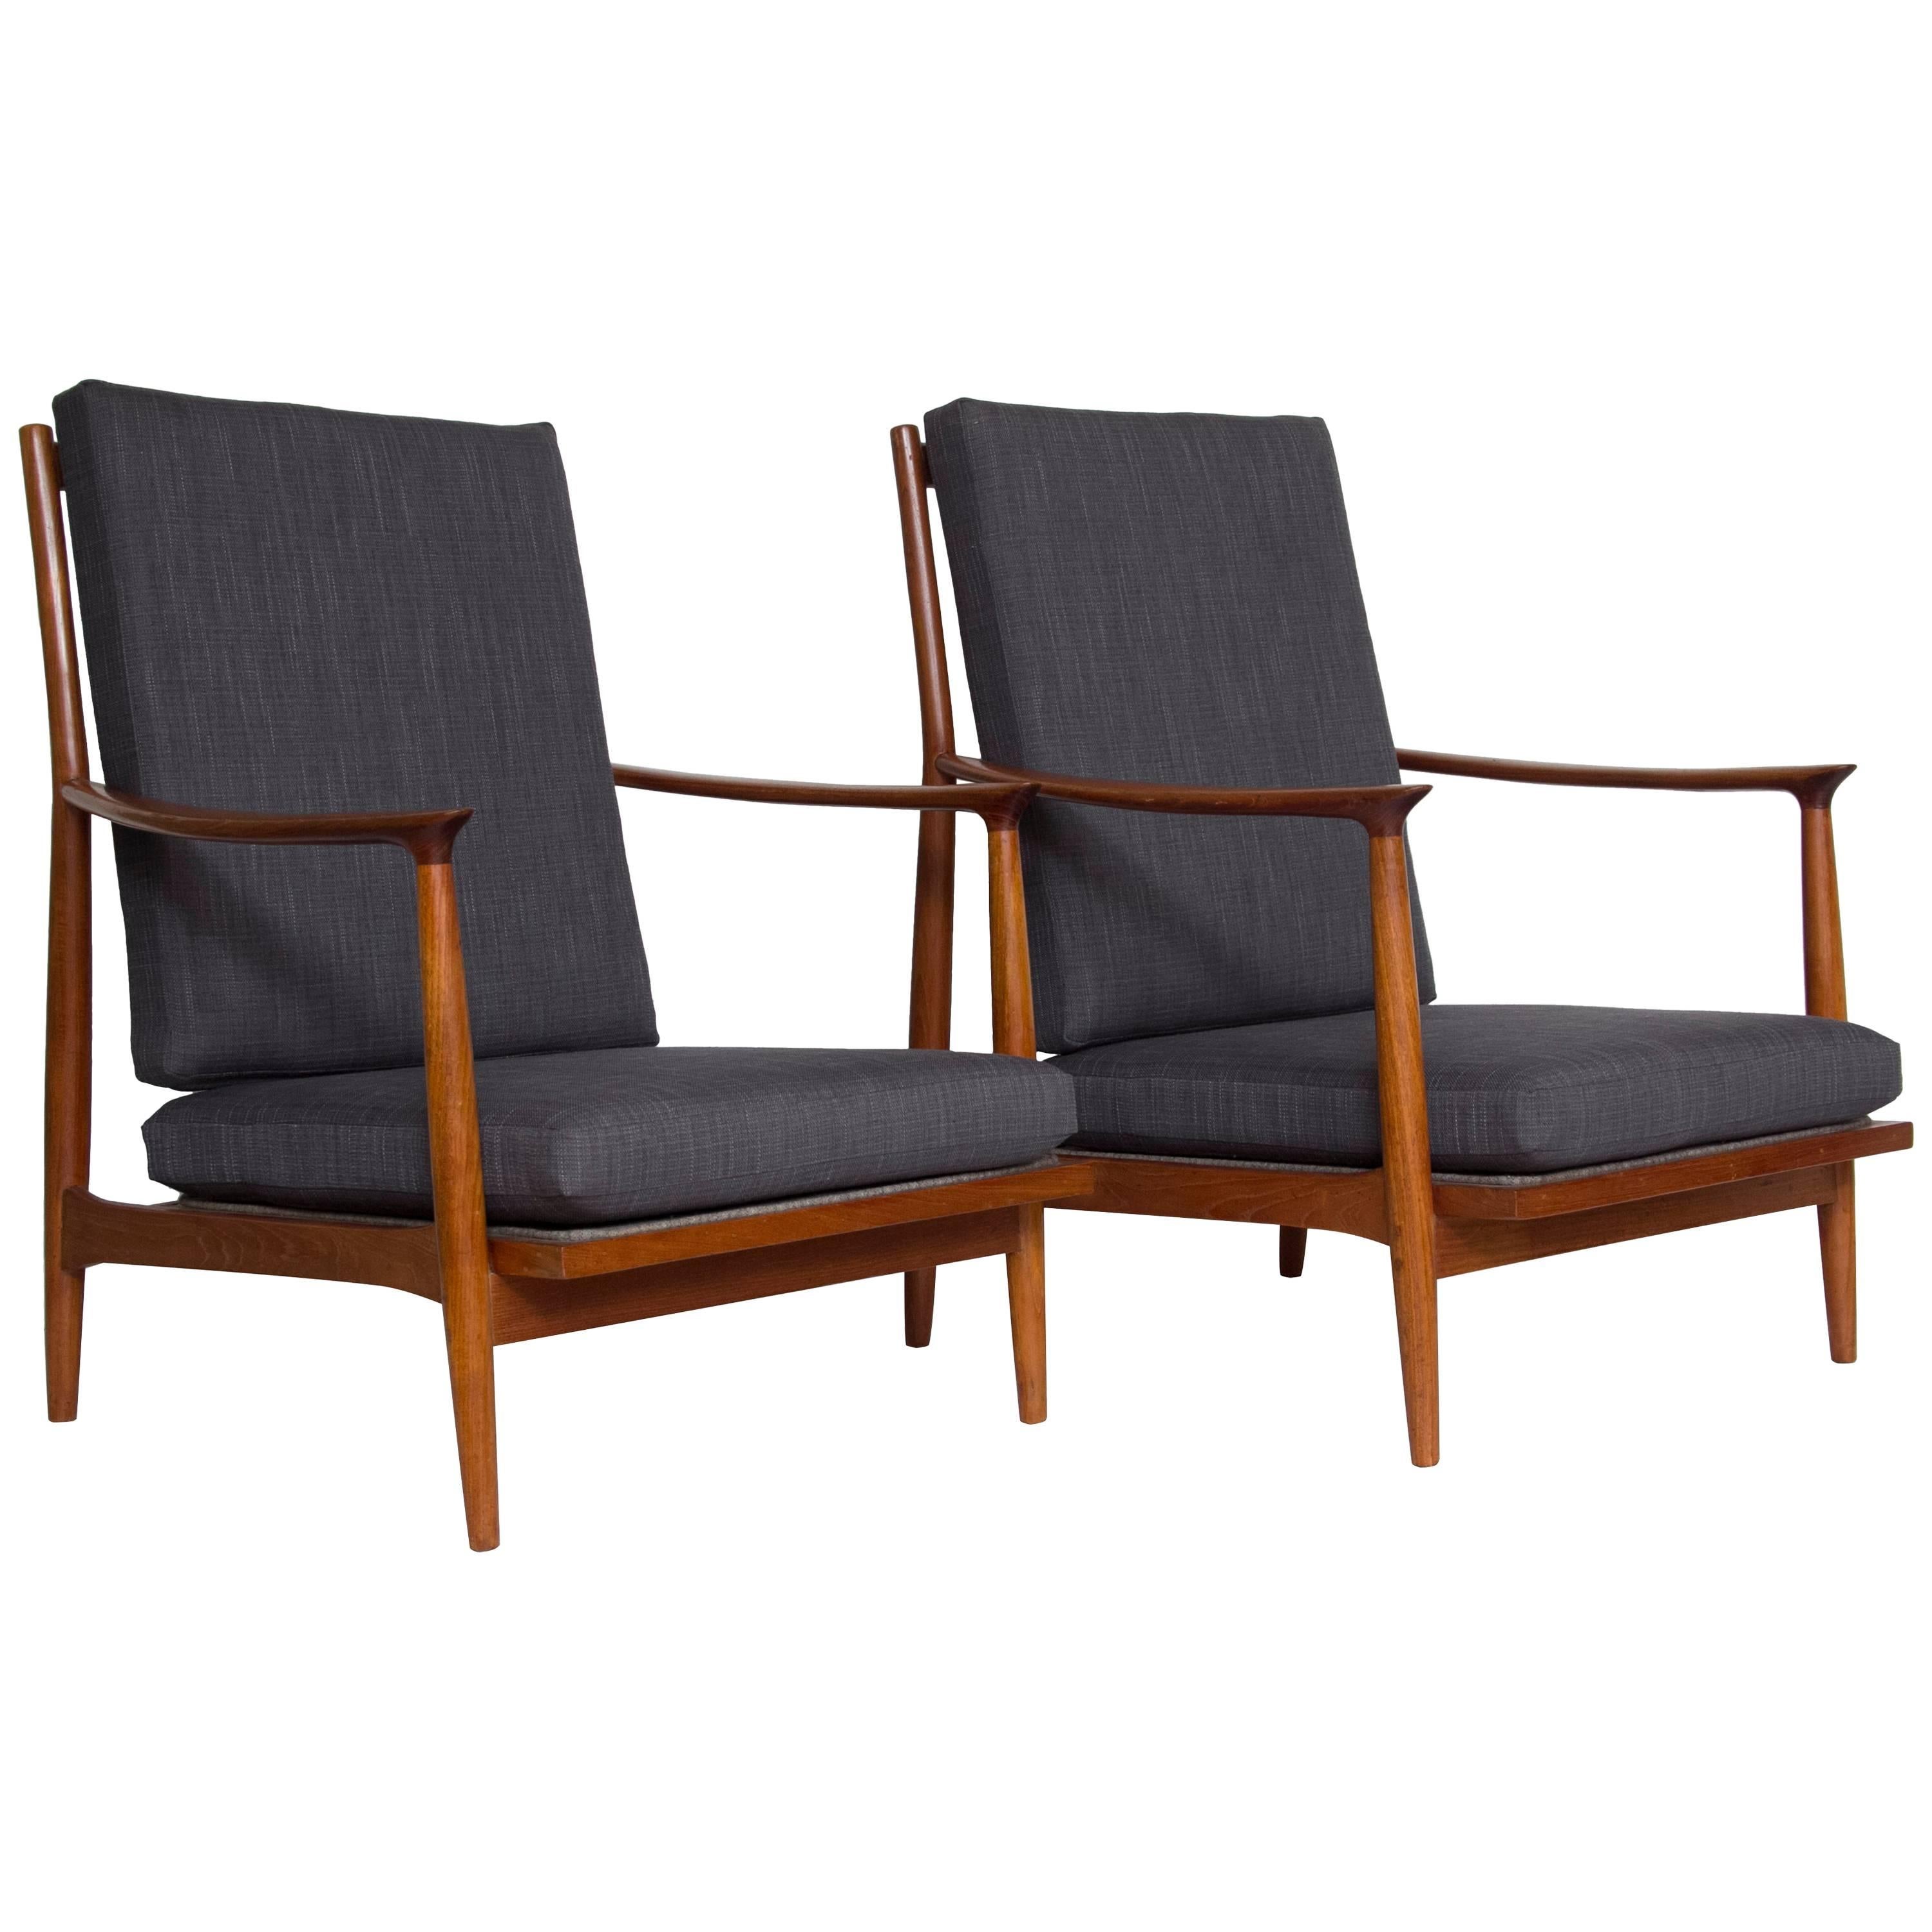 Pair of 1970s Teak Lounge Chairs